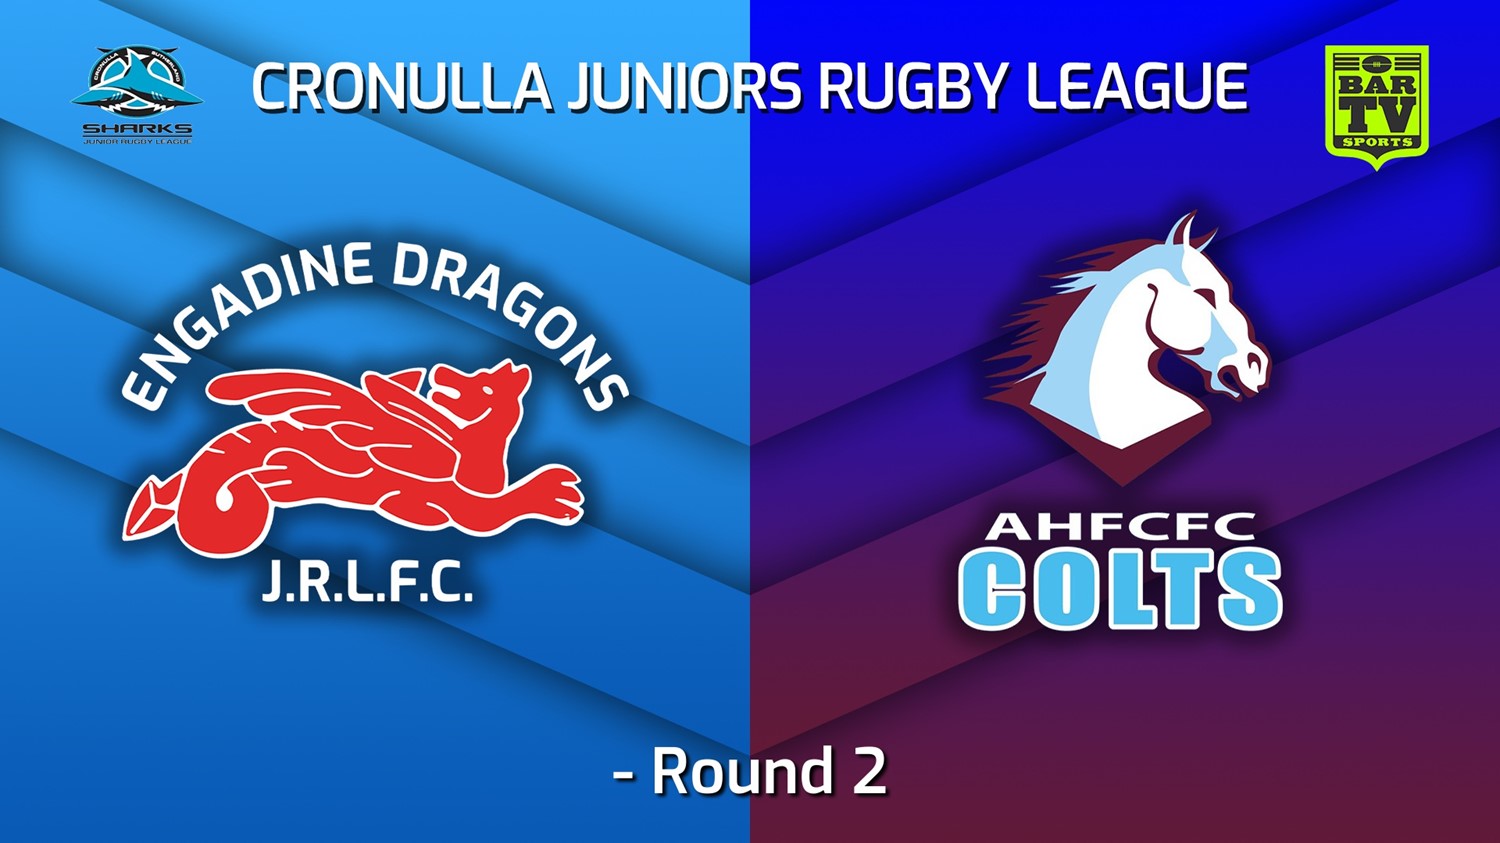 220507-Cronulla Juniors - U12 Bronze Round 2 - Engadine Dragons v Aquinas Colts Slate Image